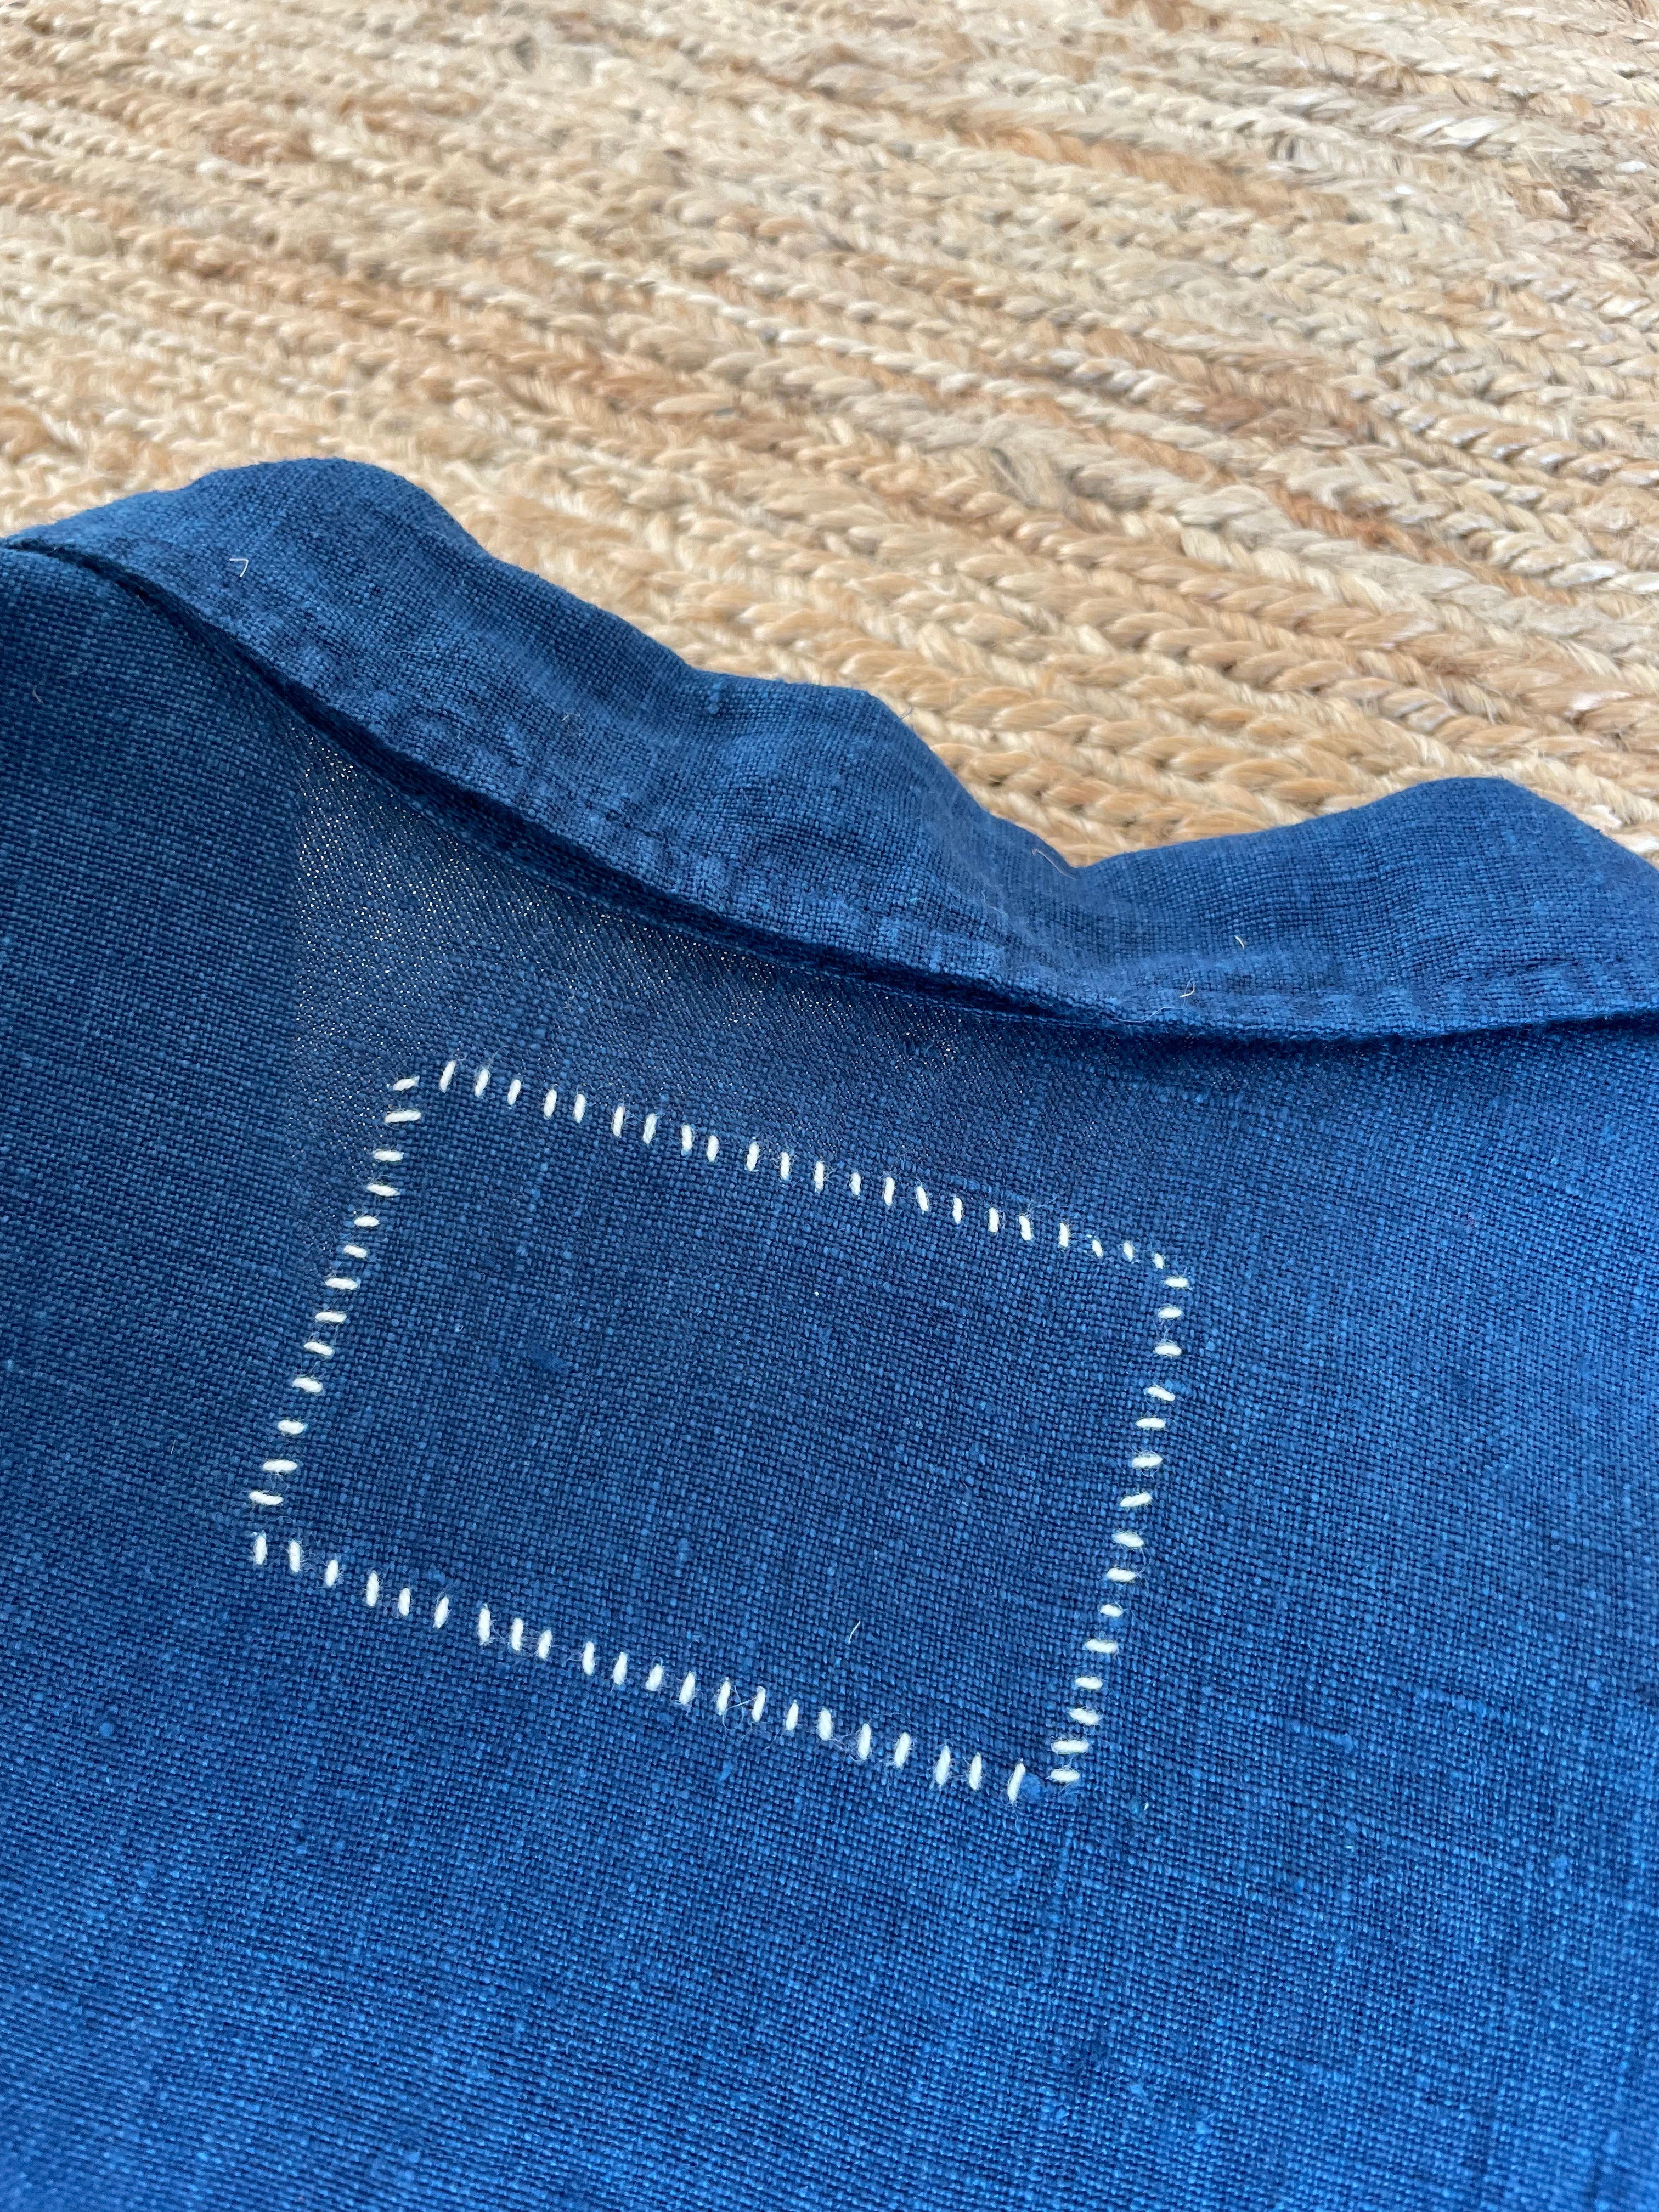 Hemp Long-sleeve Shirt | Organic Indigo Hand-dyed